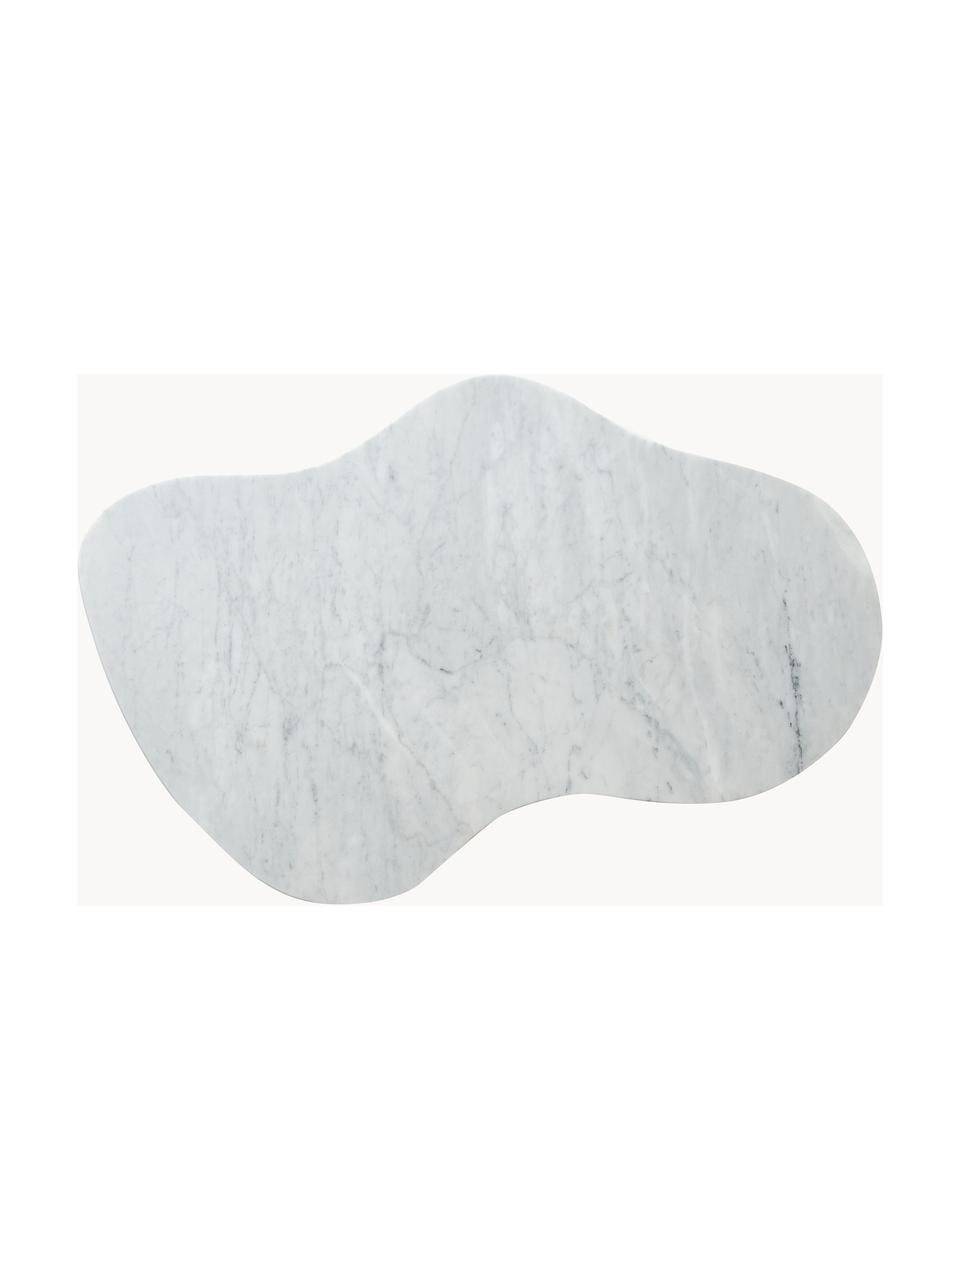 Marmeren salontafel Naruto in organische vorm, Tafelblad: marmer, Poten: eikenhout, Eikenhout, wit, gemarmerd, B 90 x D 59 cm